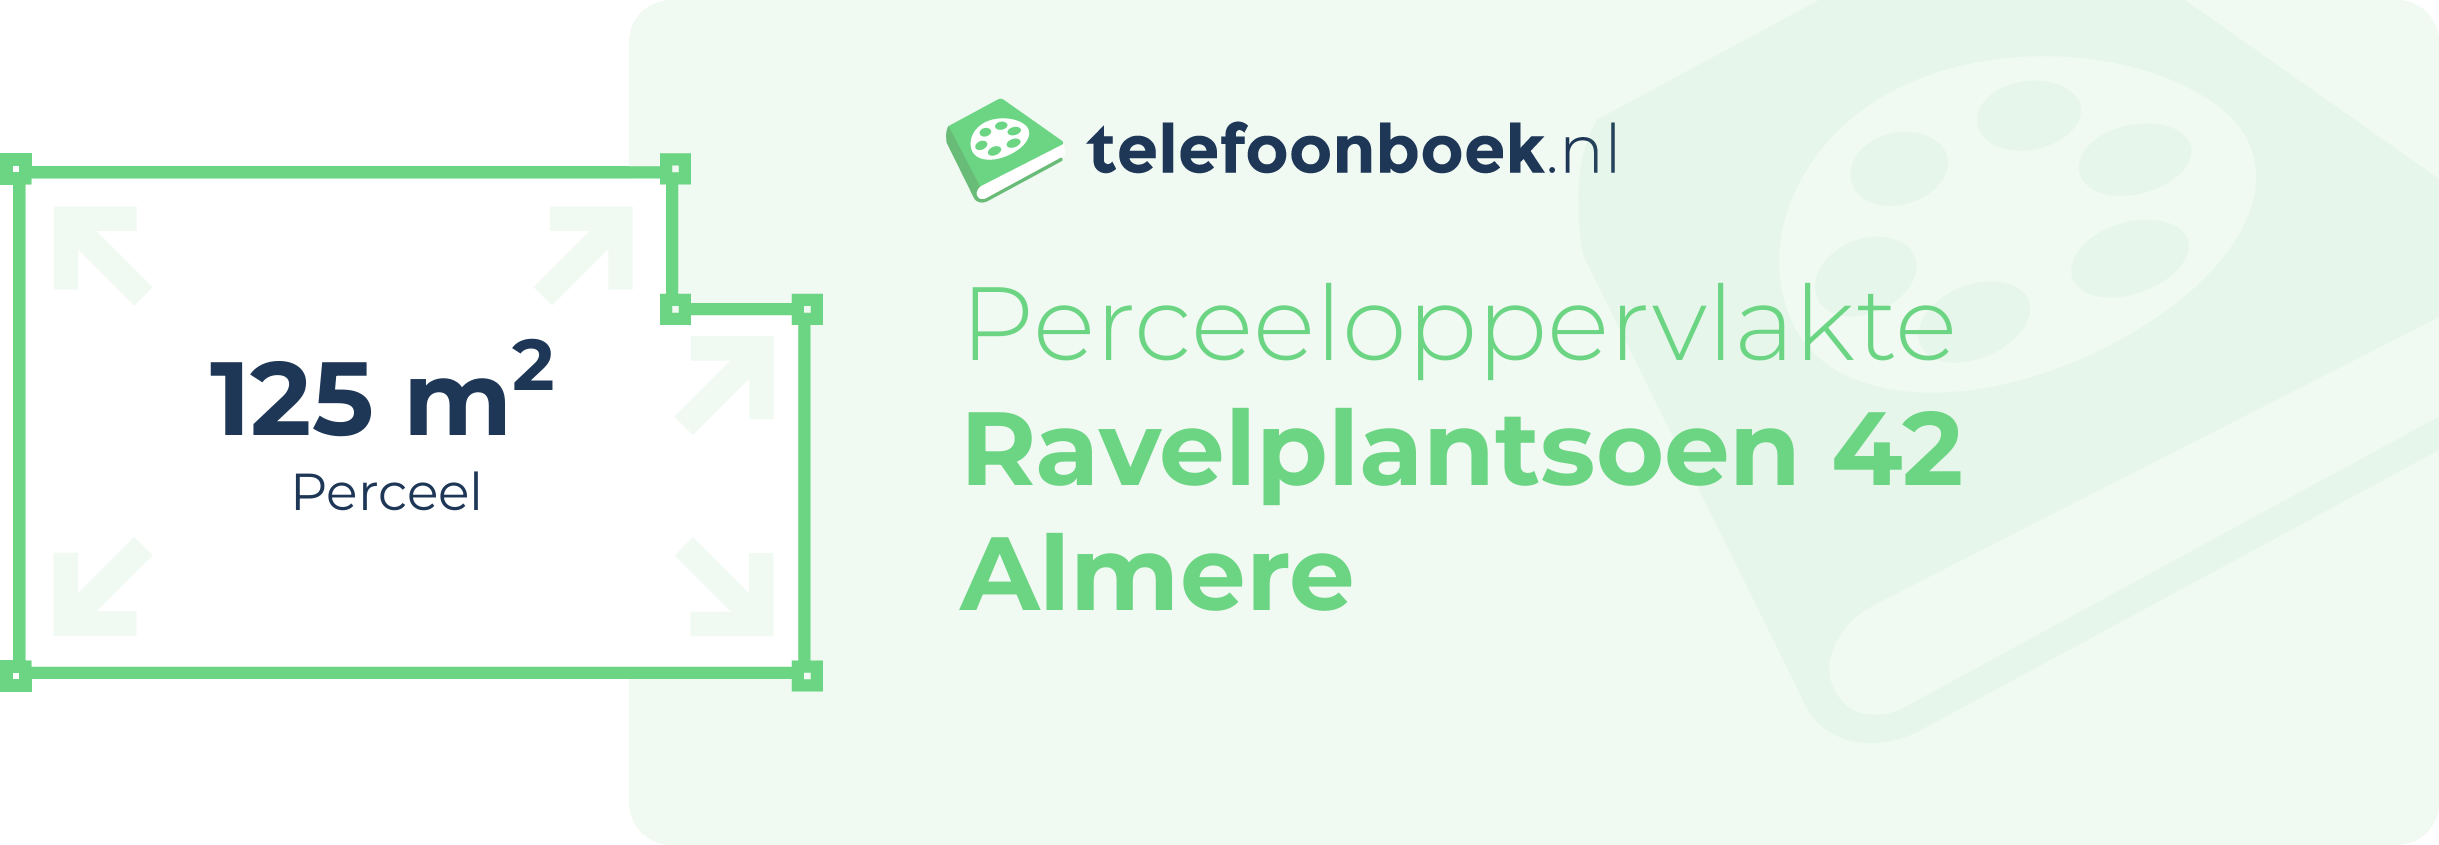 Perceeloppervlakte Ravelplantsoen 42 Almere